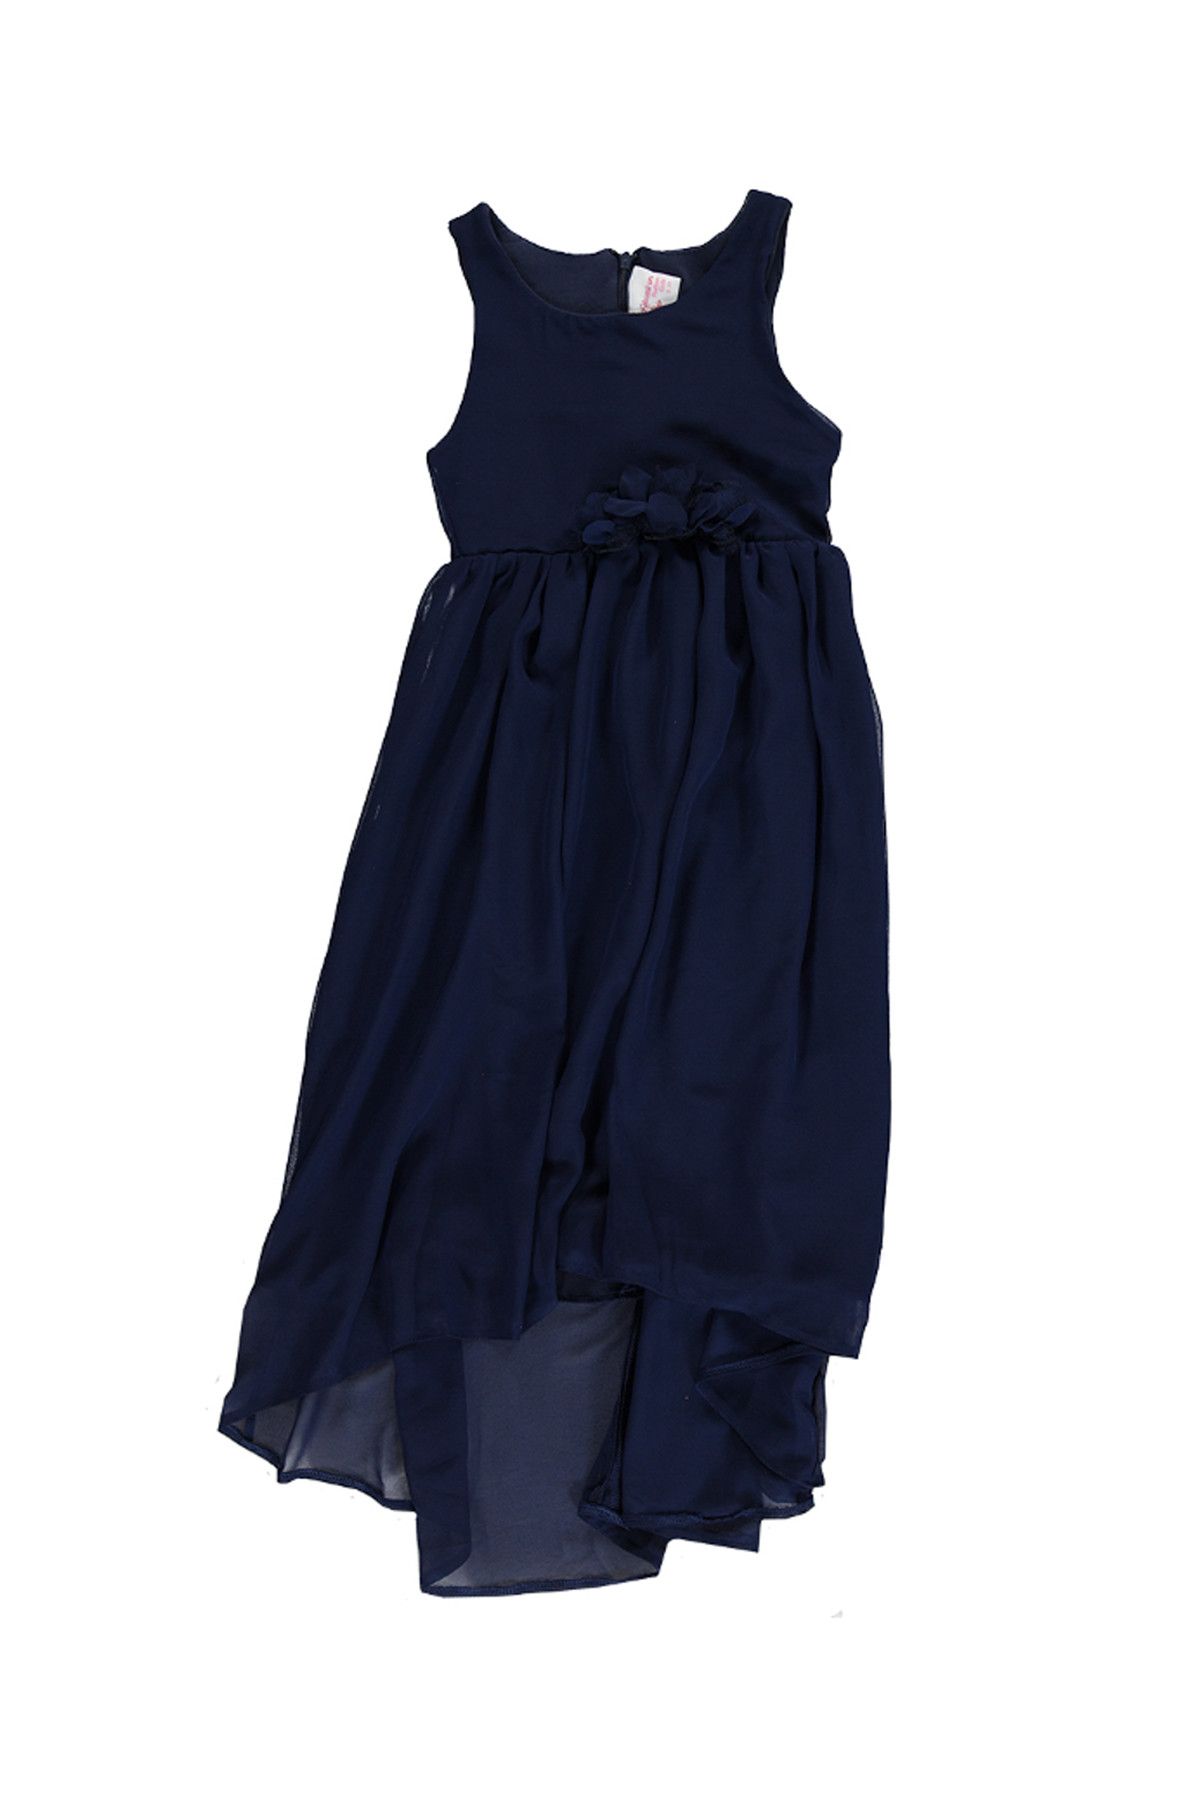 Missiva Lacivert Kız Çocuk Elbise 26A807112K71-1